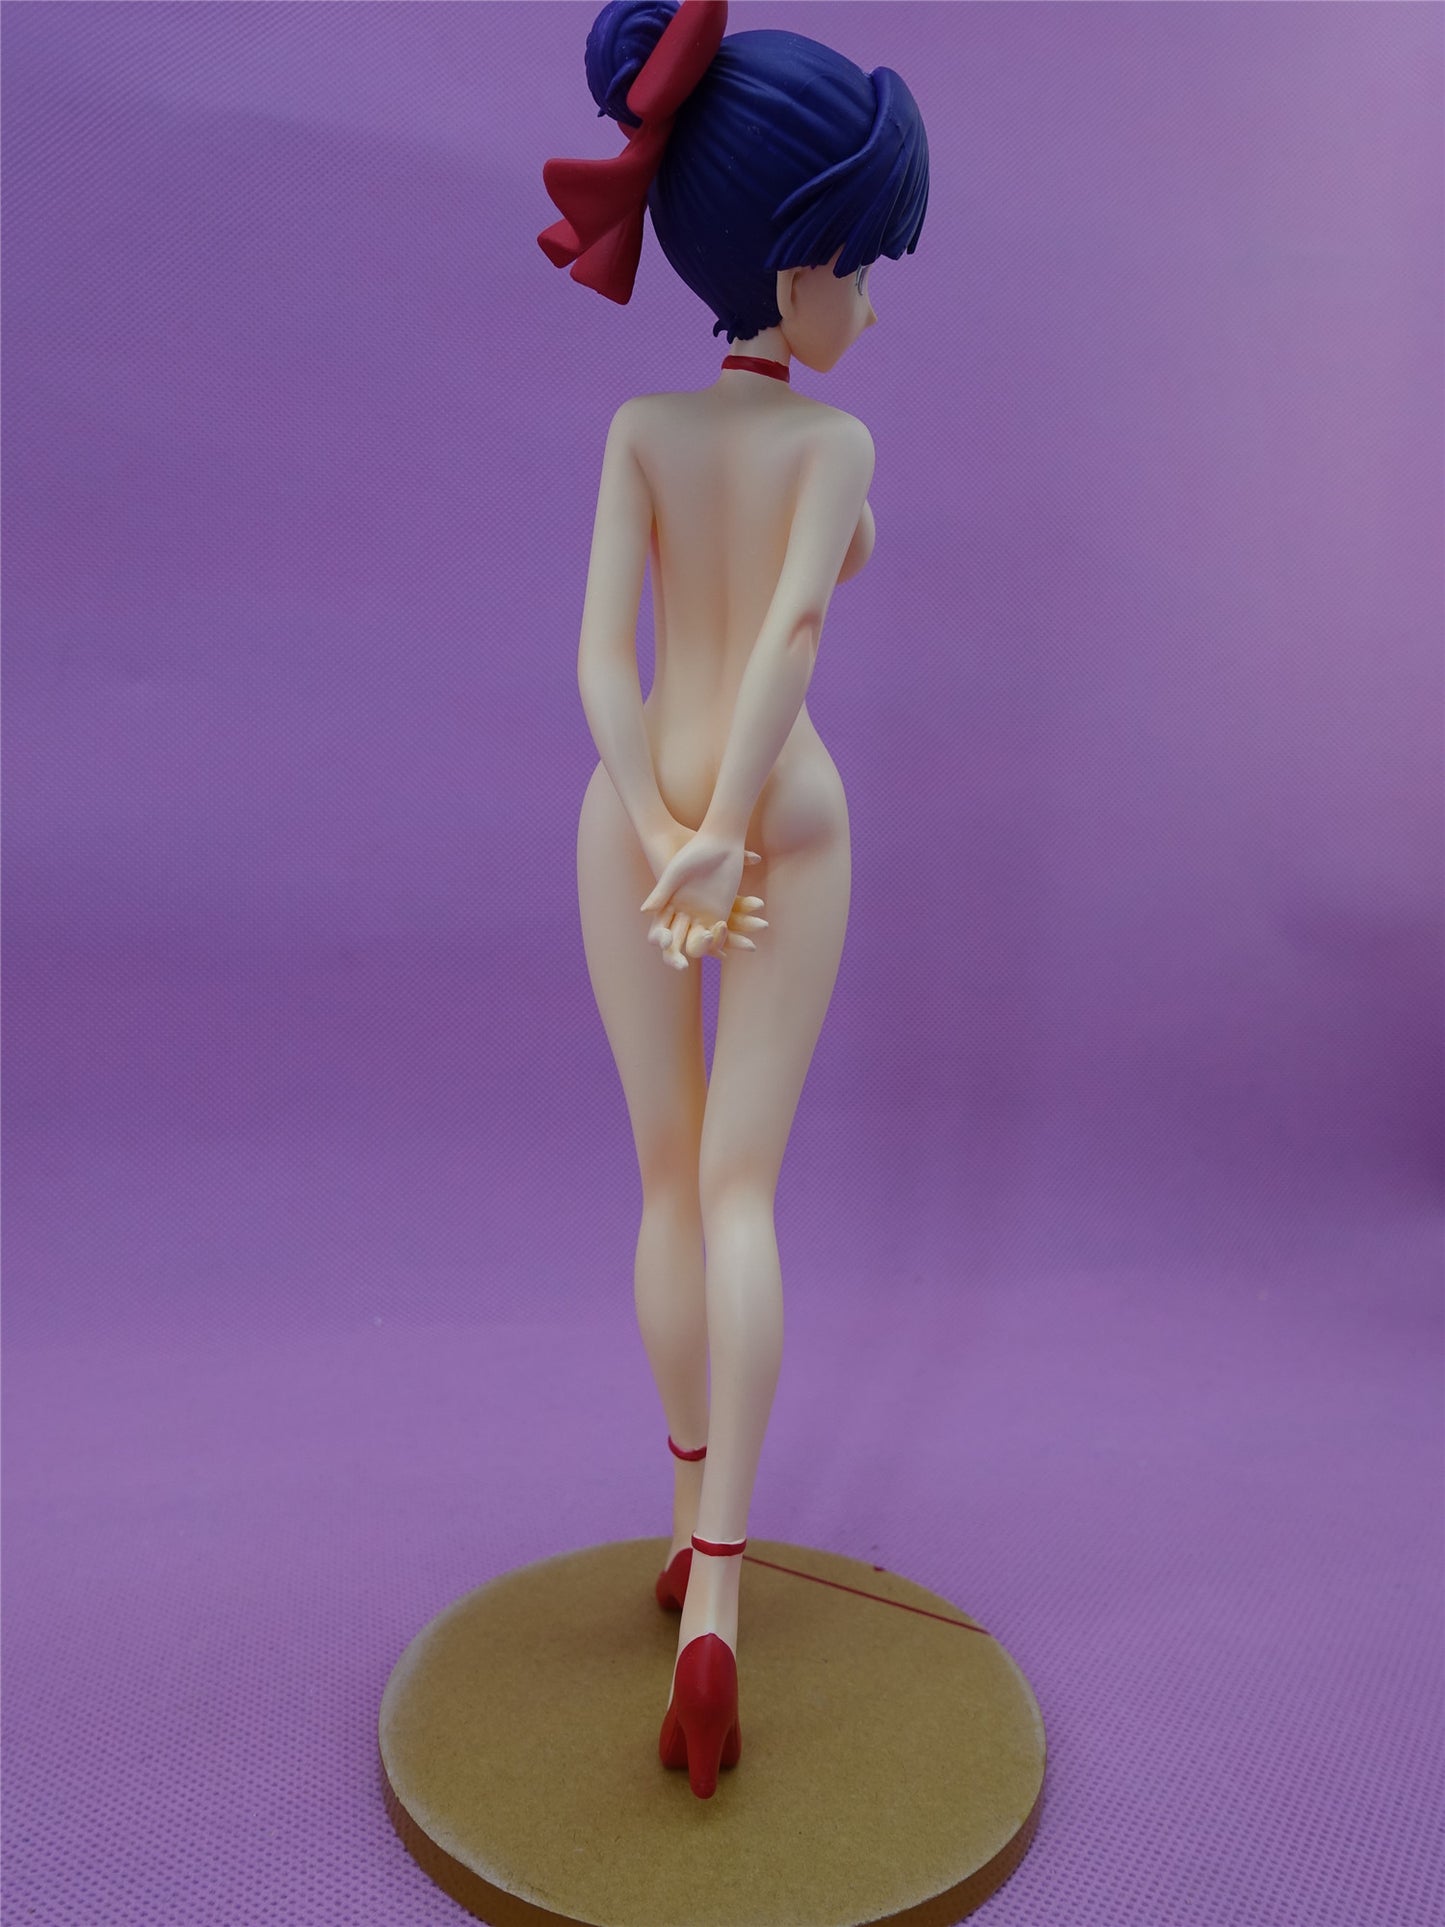 Gegege no Kitaro - Neko Musume 1/6 naked anime figure sexy